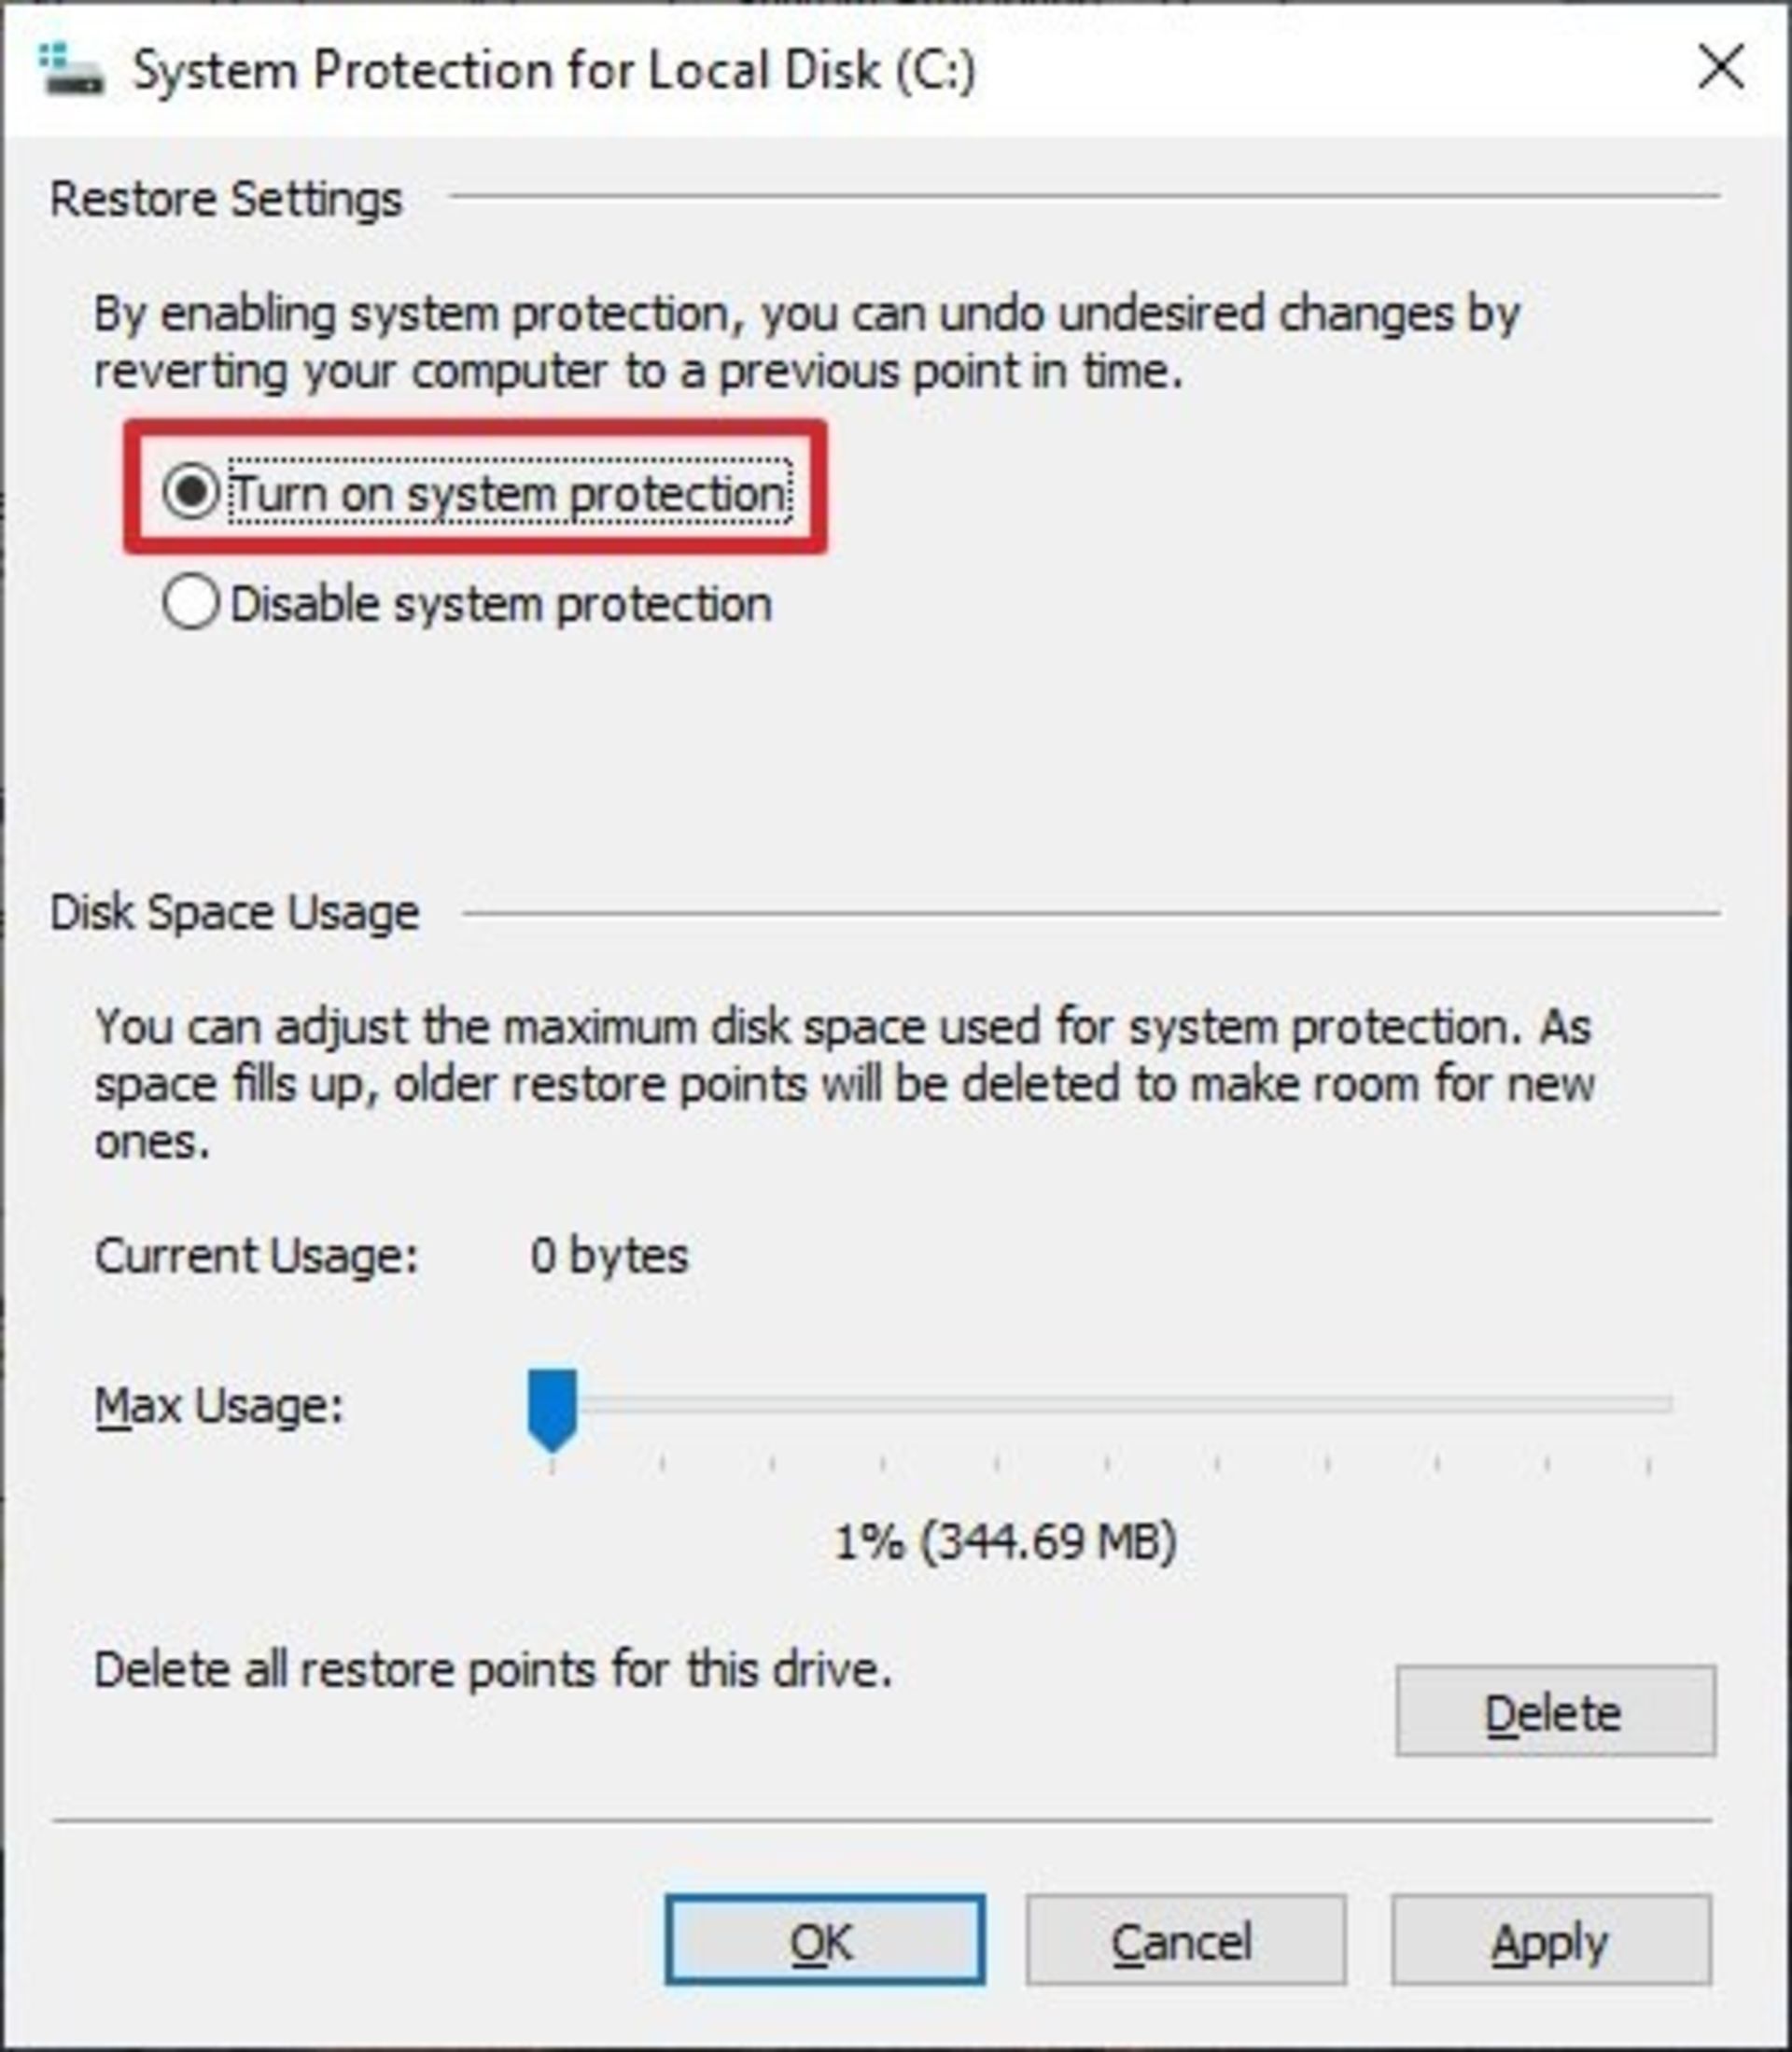 سیستم ریستور ویندوز 10 / Windows 10 System Restore